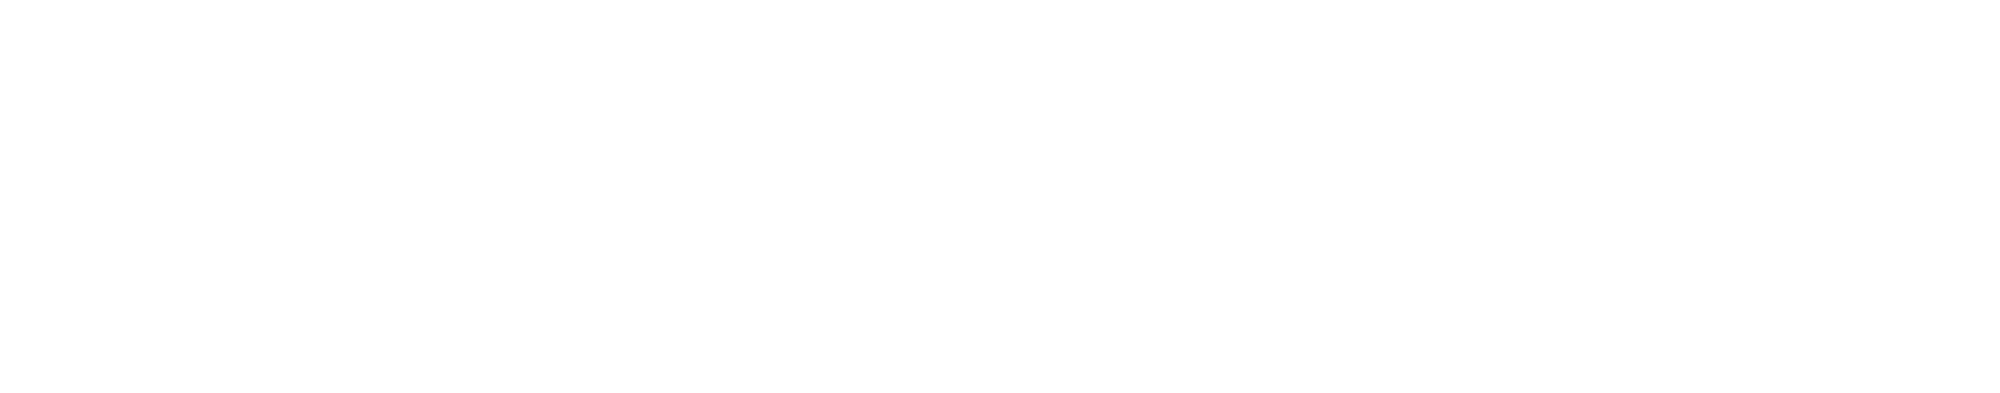 Unia logo